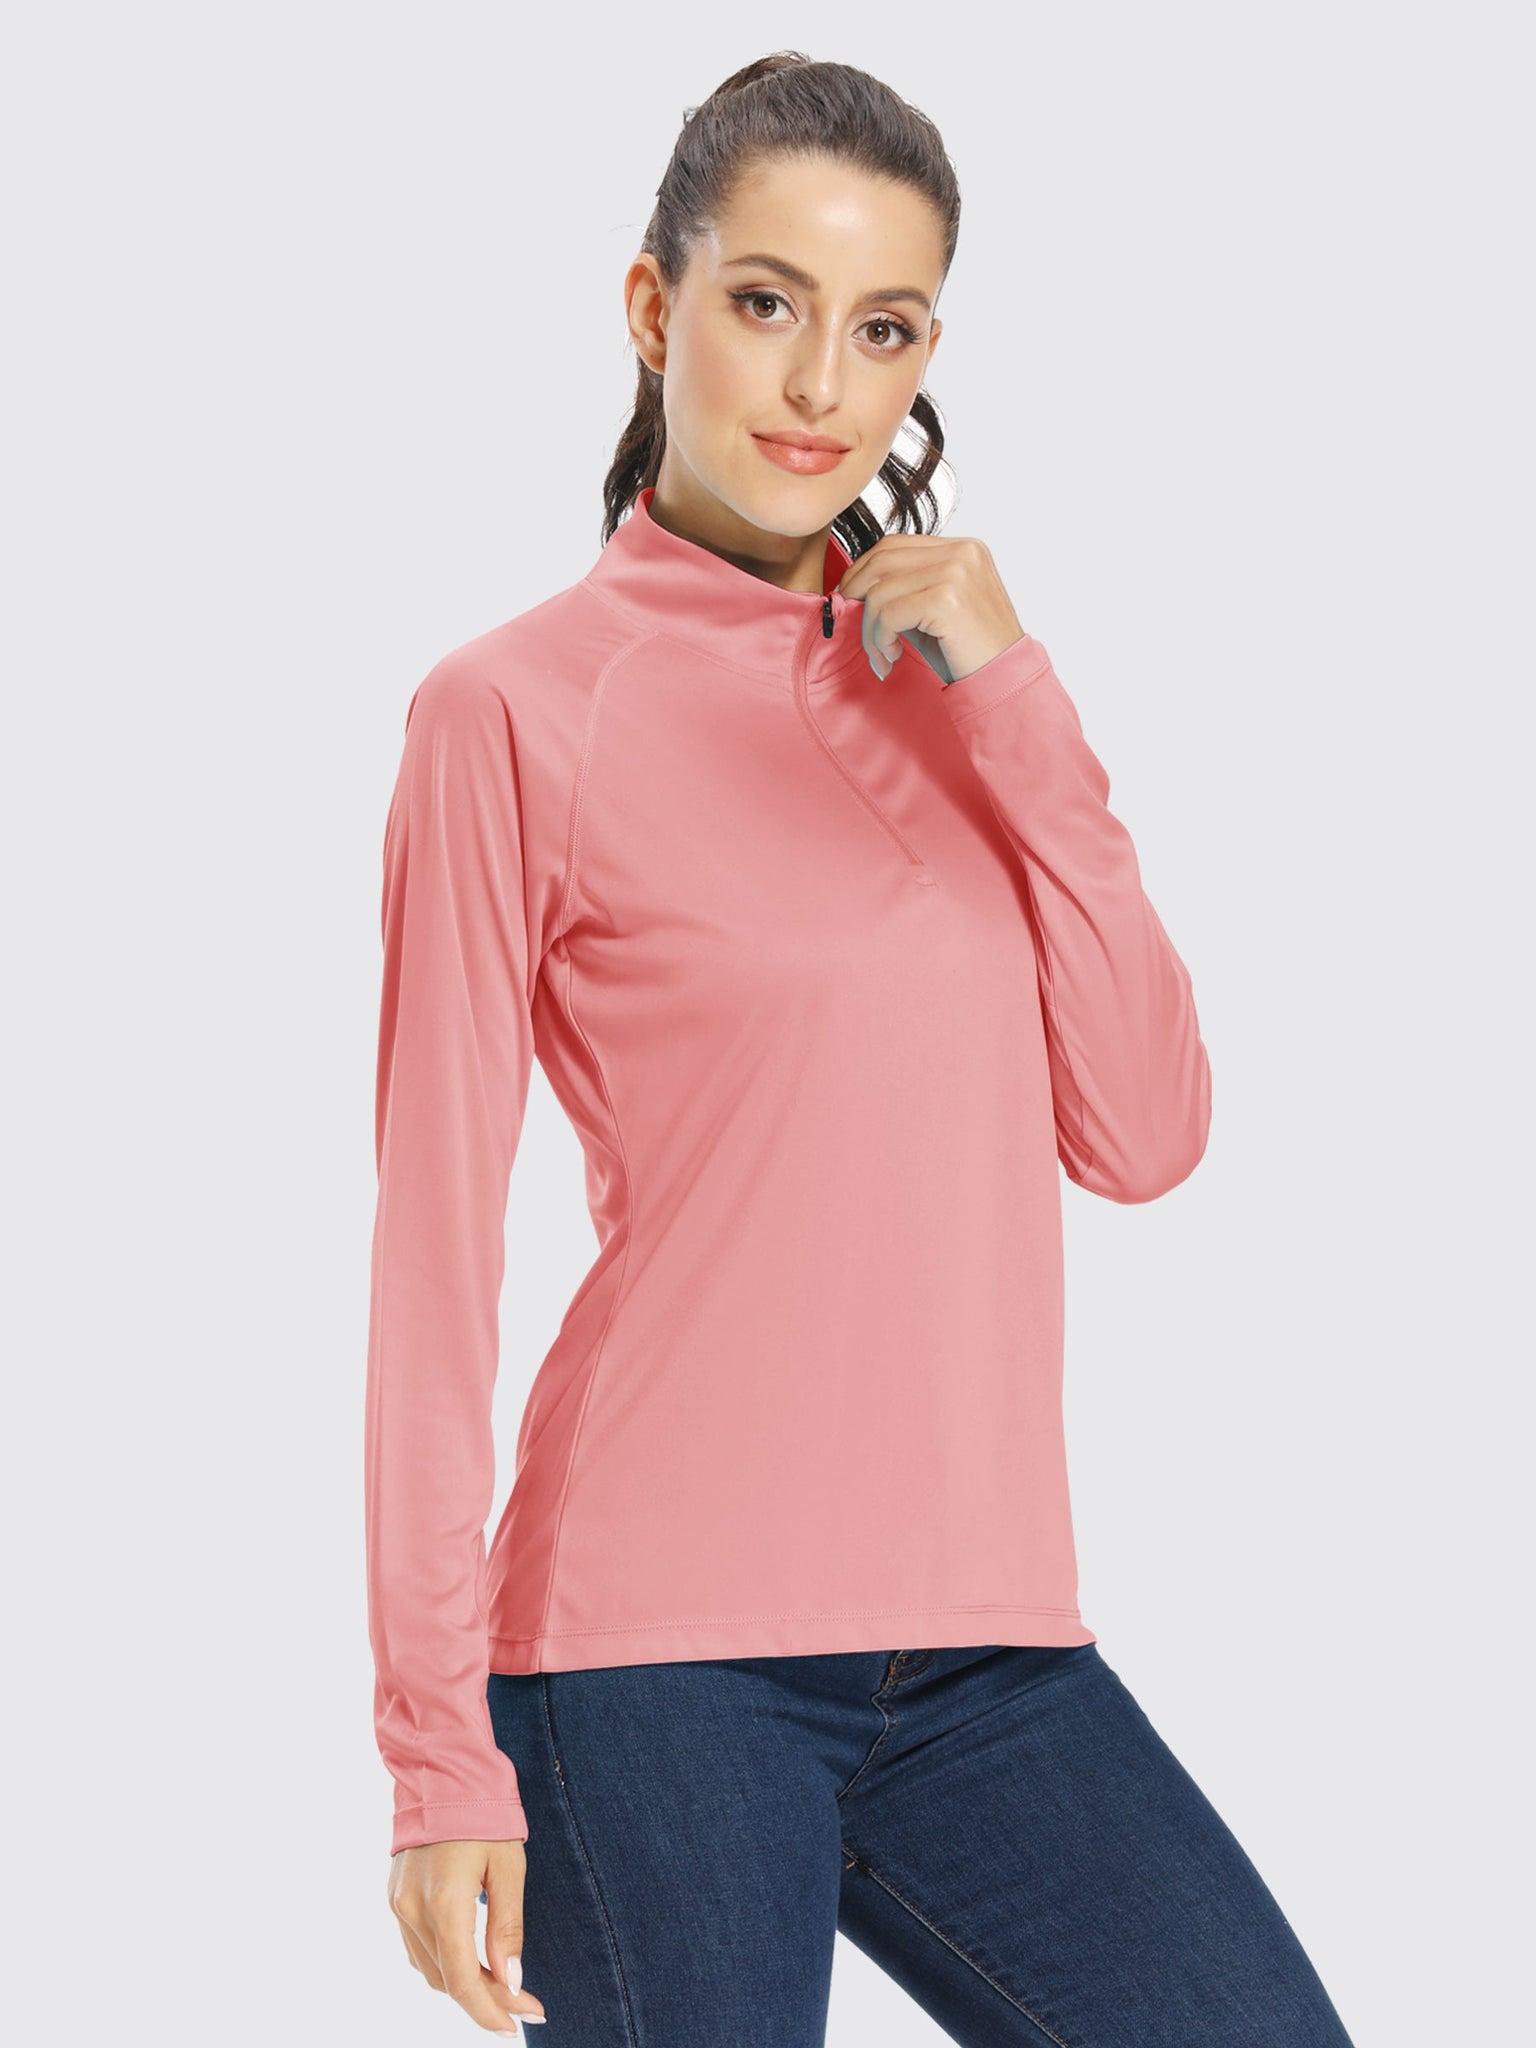 Women's UPF 50+ Sun Protection Shirt Half-Zip